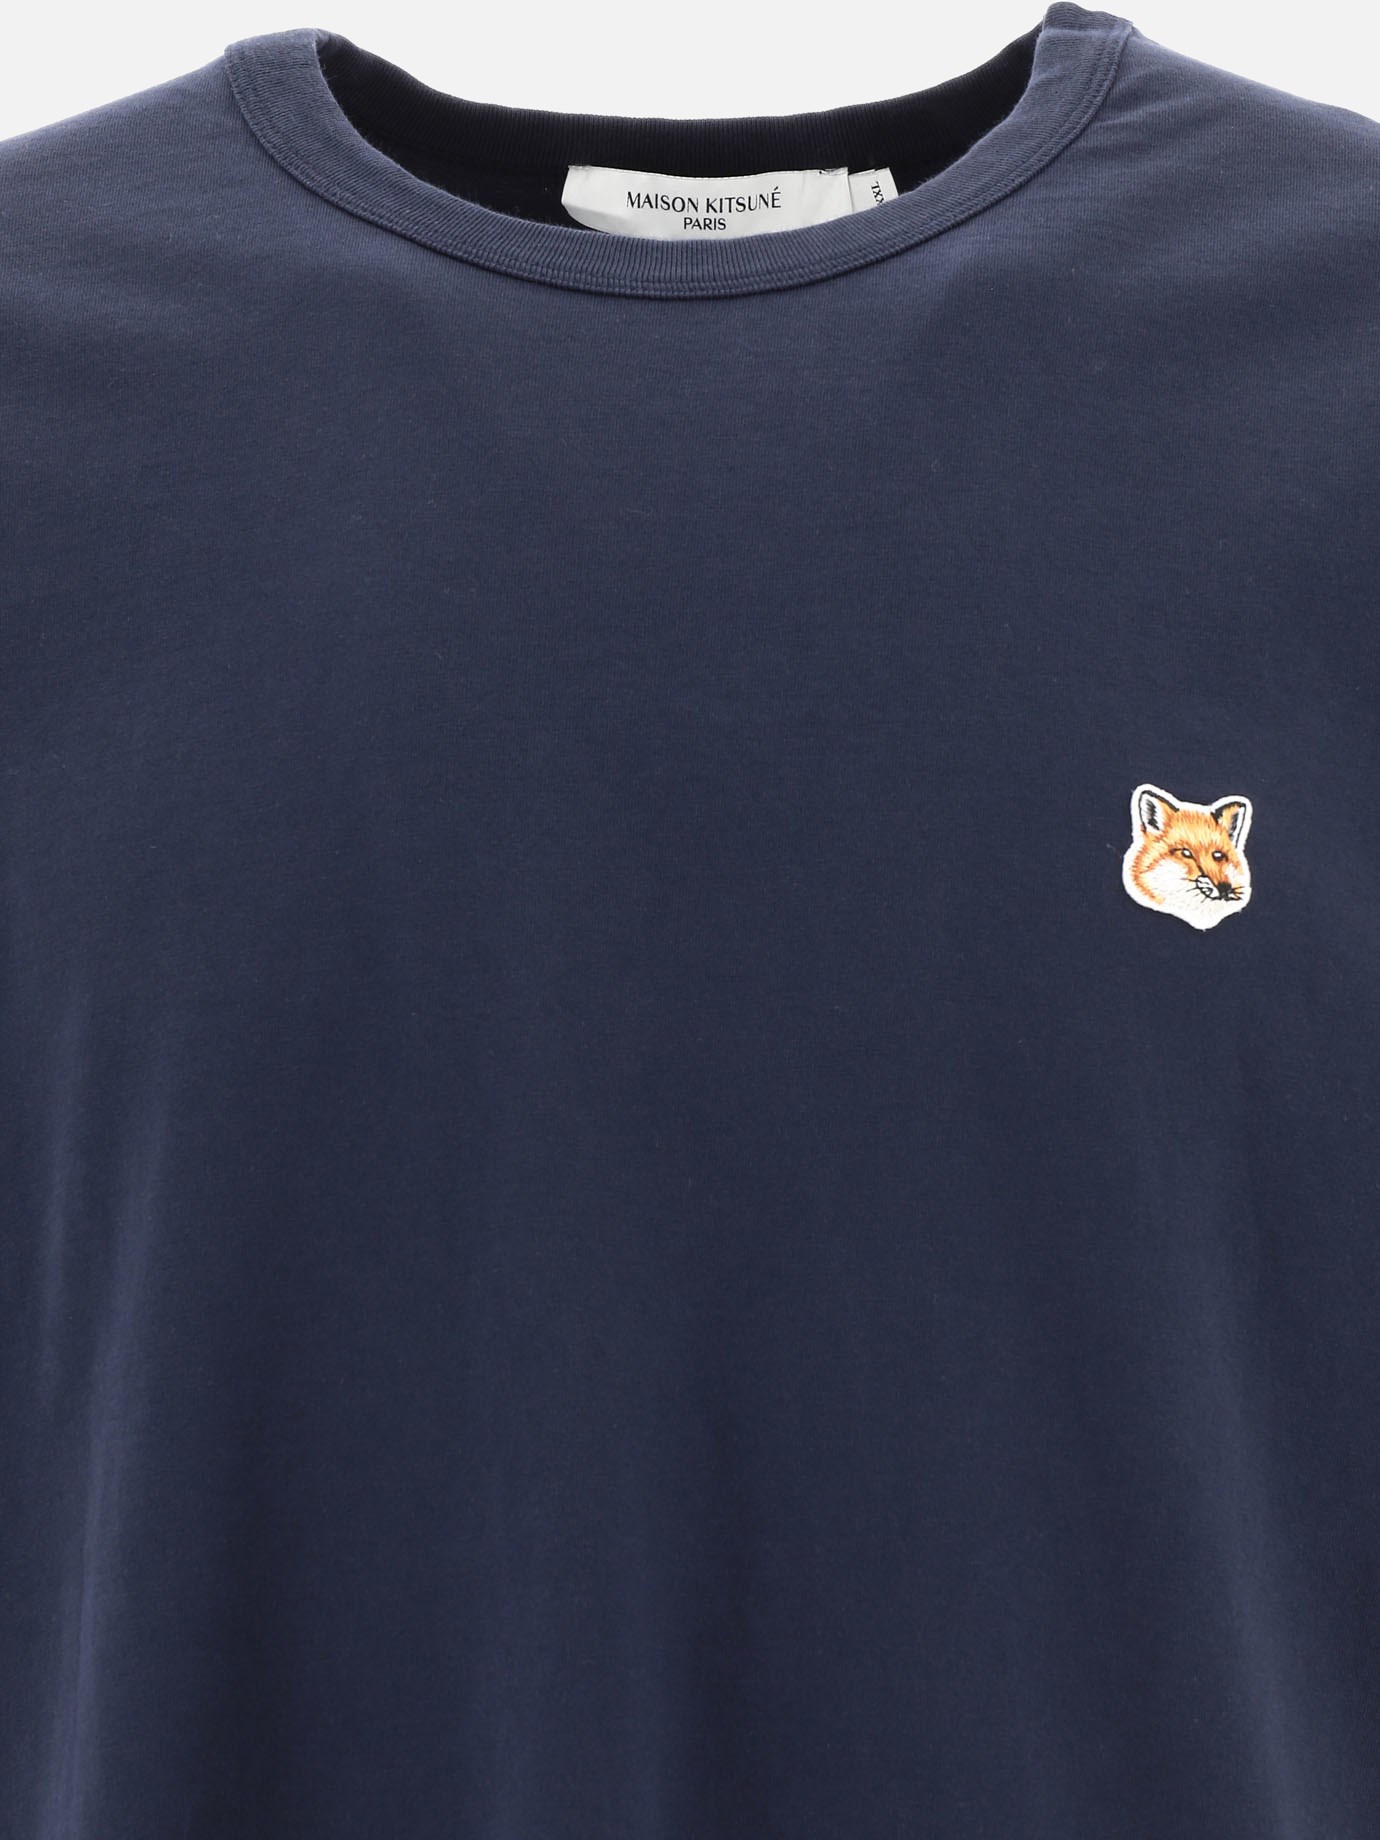  Fox Head  t-shirt by Maison Kitsuné